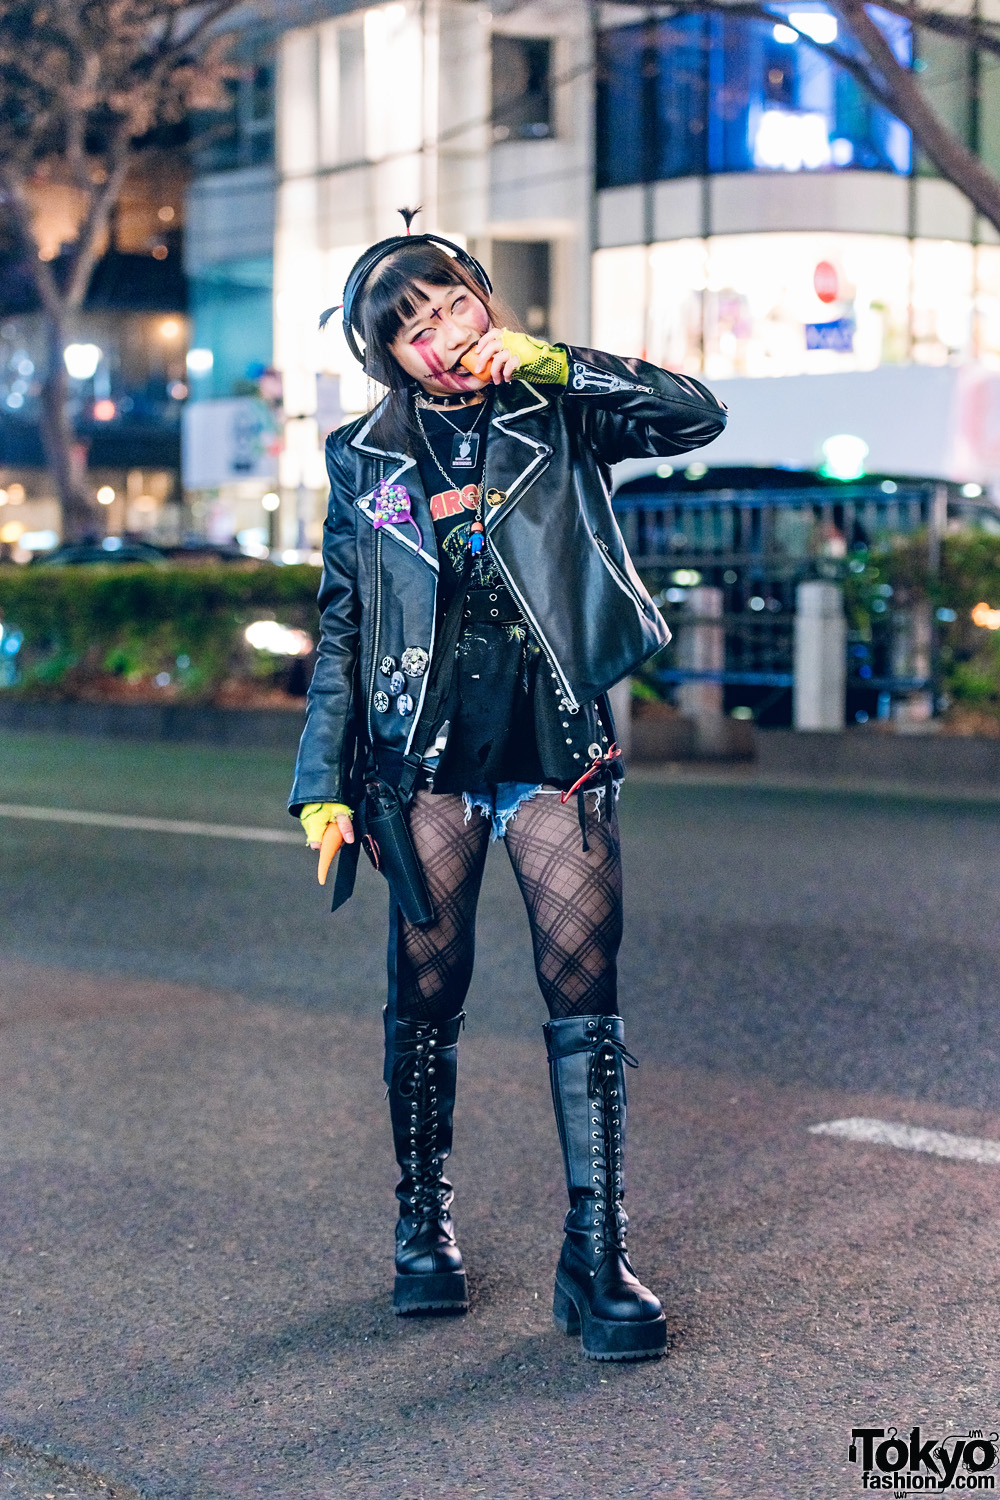 Harajuku Punk in Studded Leather Jacket & Boots